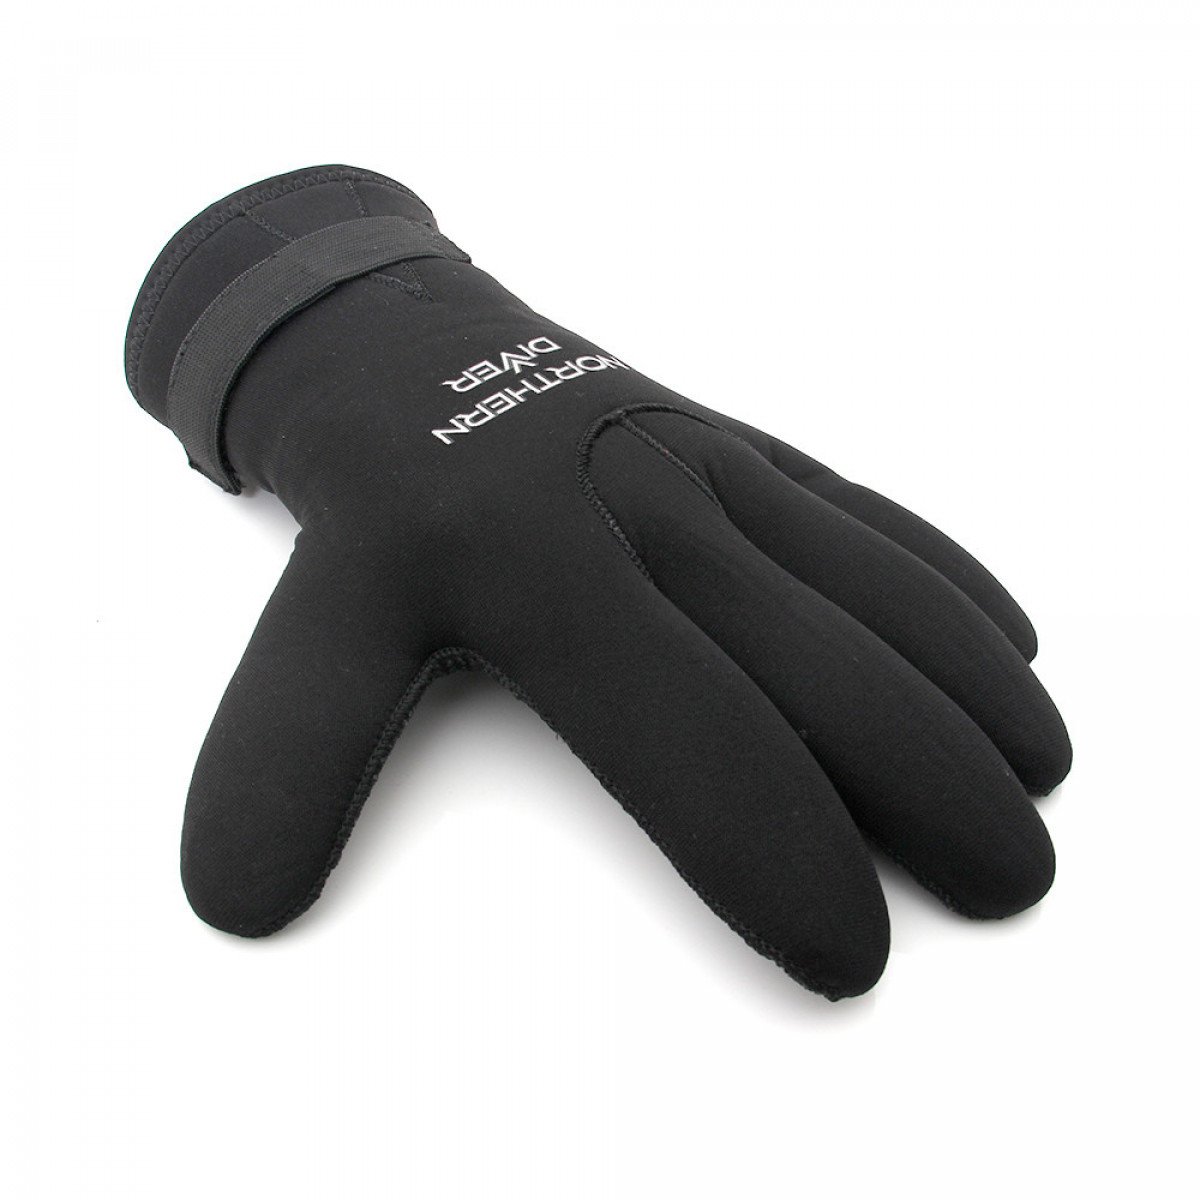 Northern Diver's cost-effective 5mm Neoprene Gloves